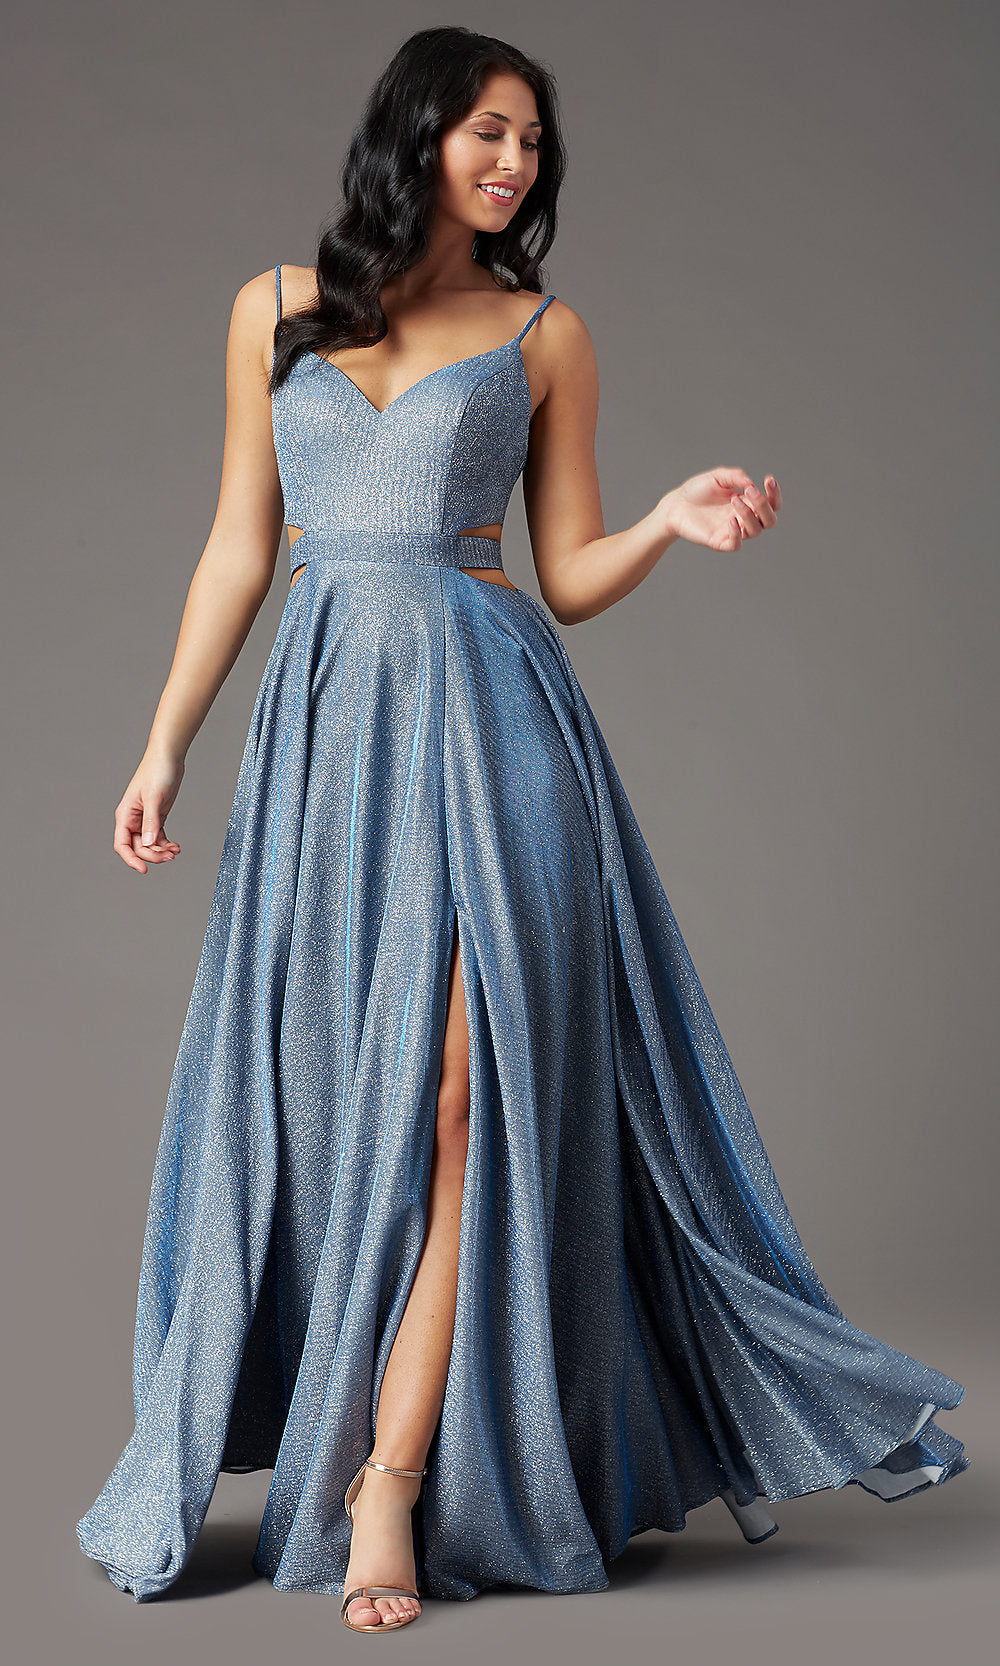 Glitter-Knit Long Blue Prom Dress by